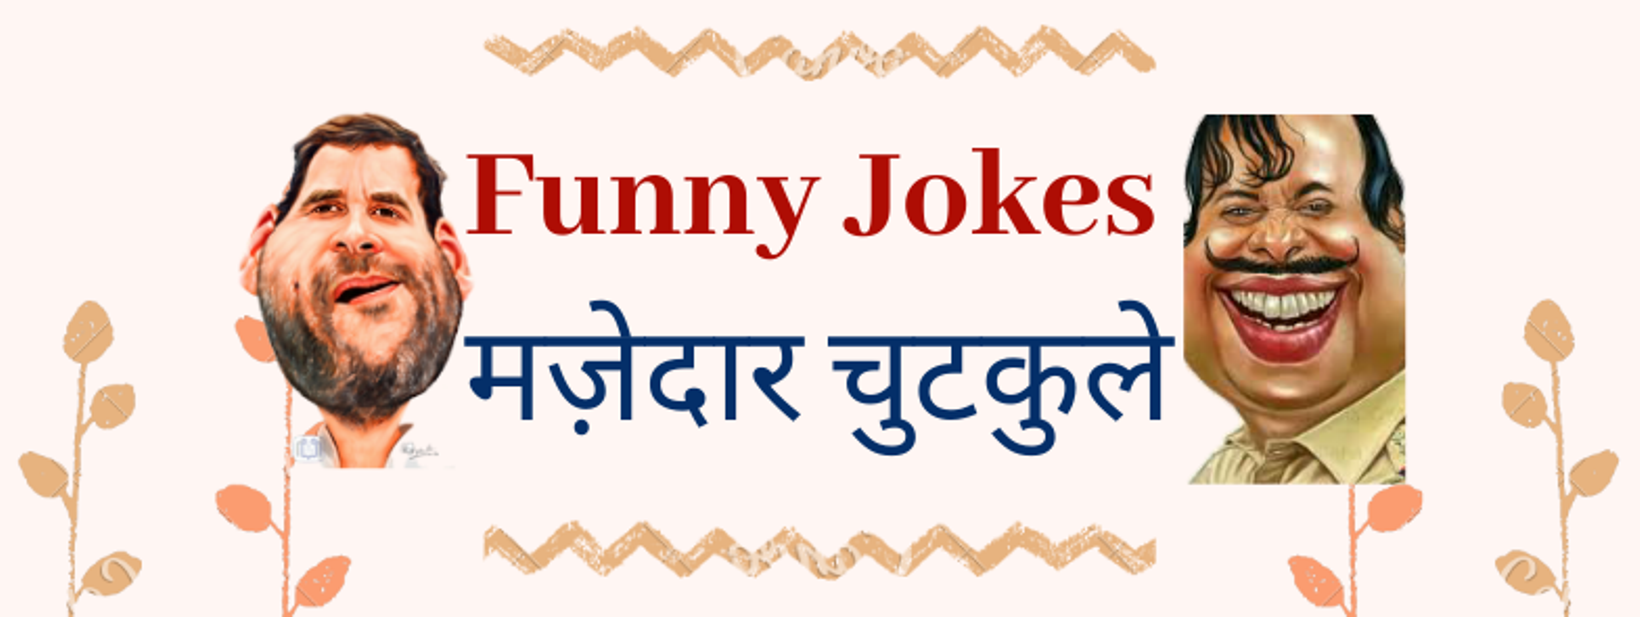 Funny Jokes मज़ेदार चुटकुले Cover Image